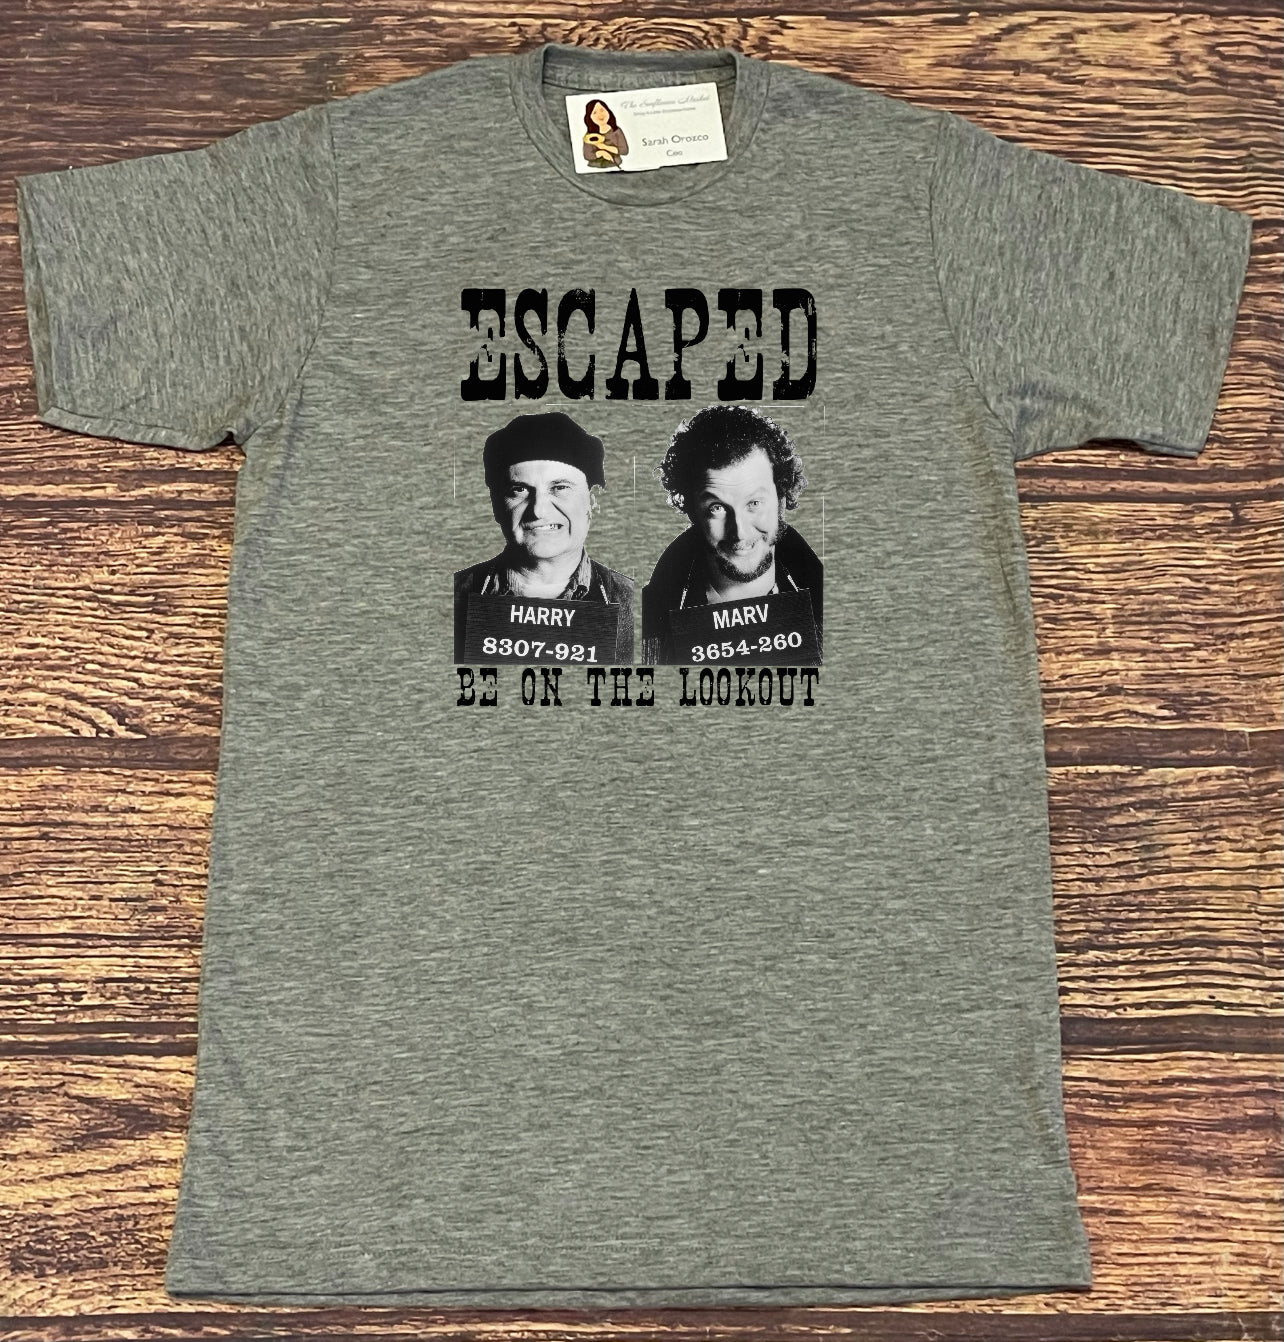 Escaped, Harry & Marv